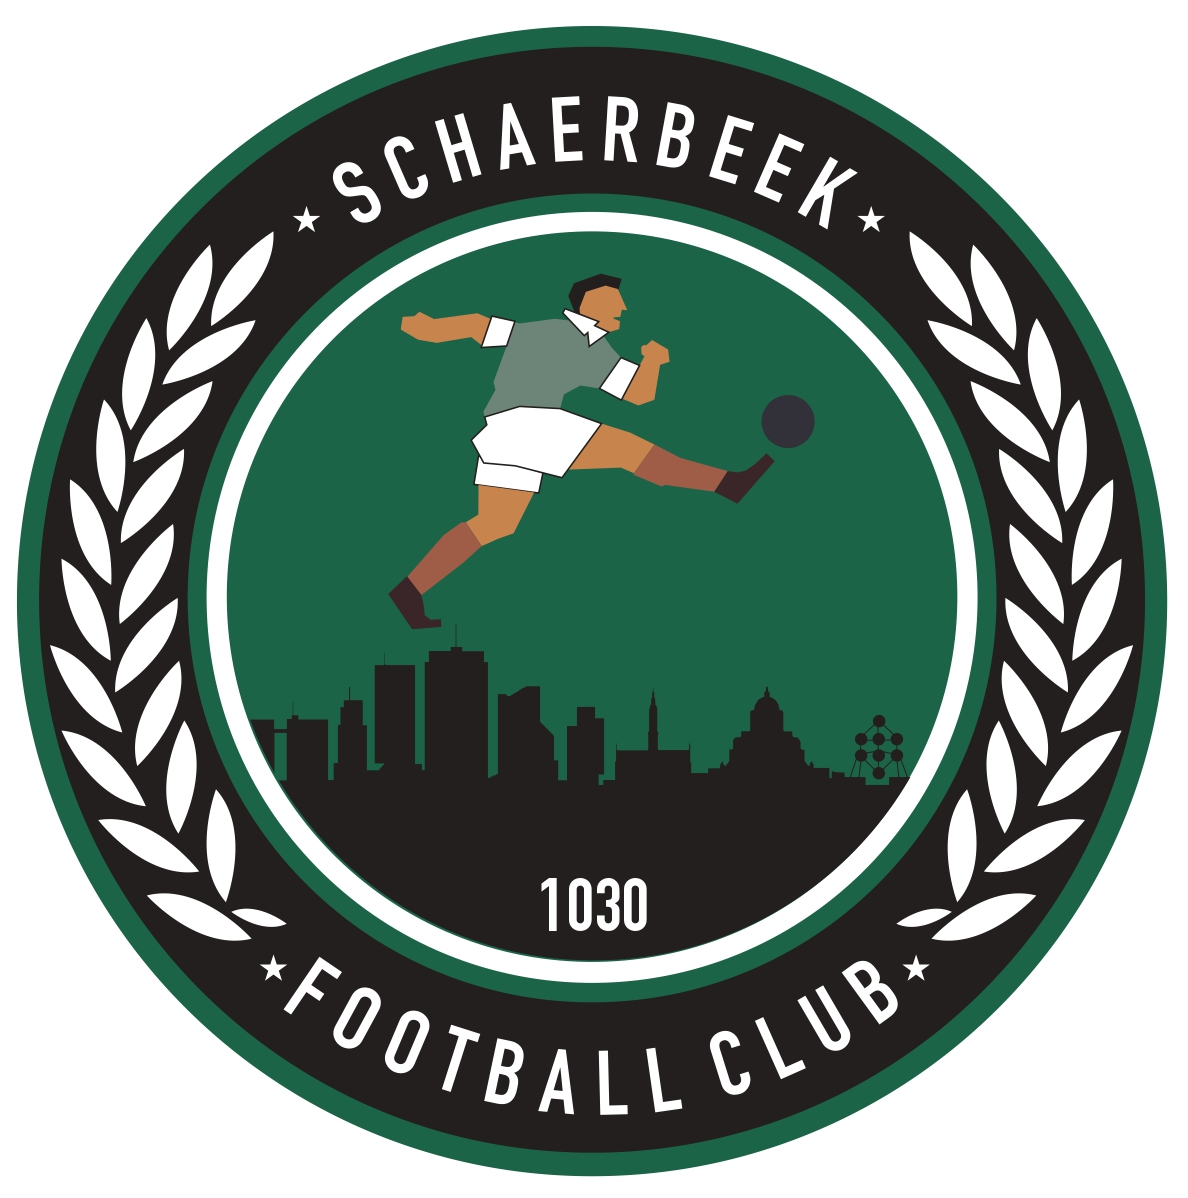 15 - Football Club Schaerbeek B